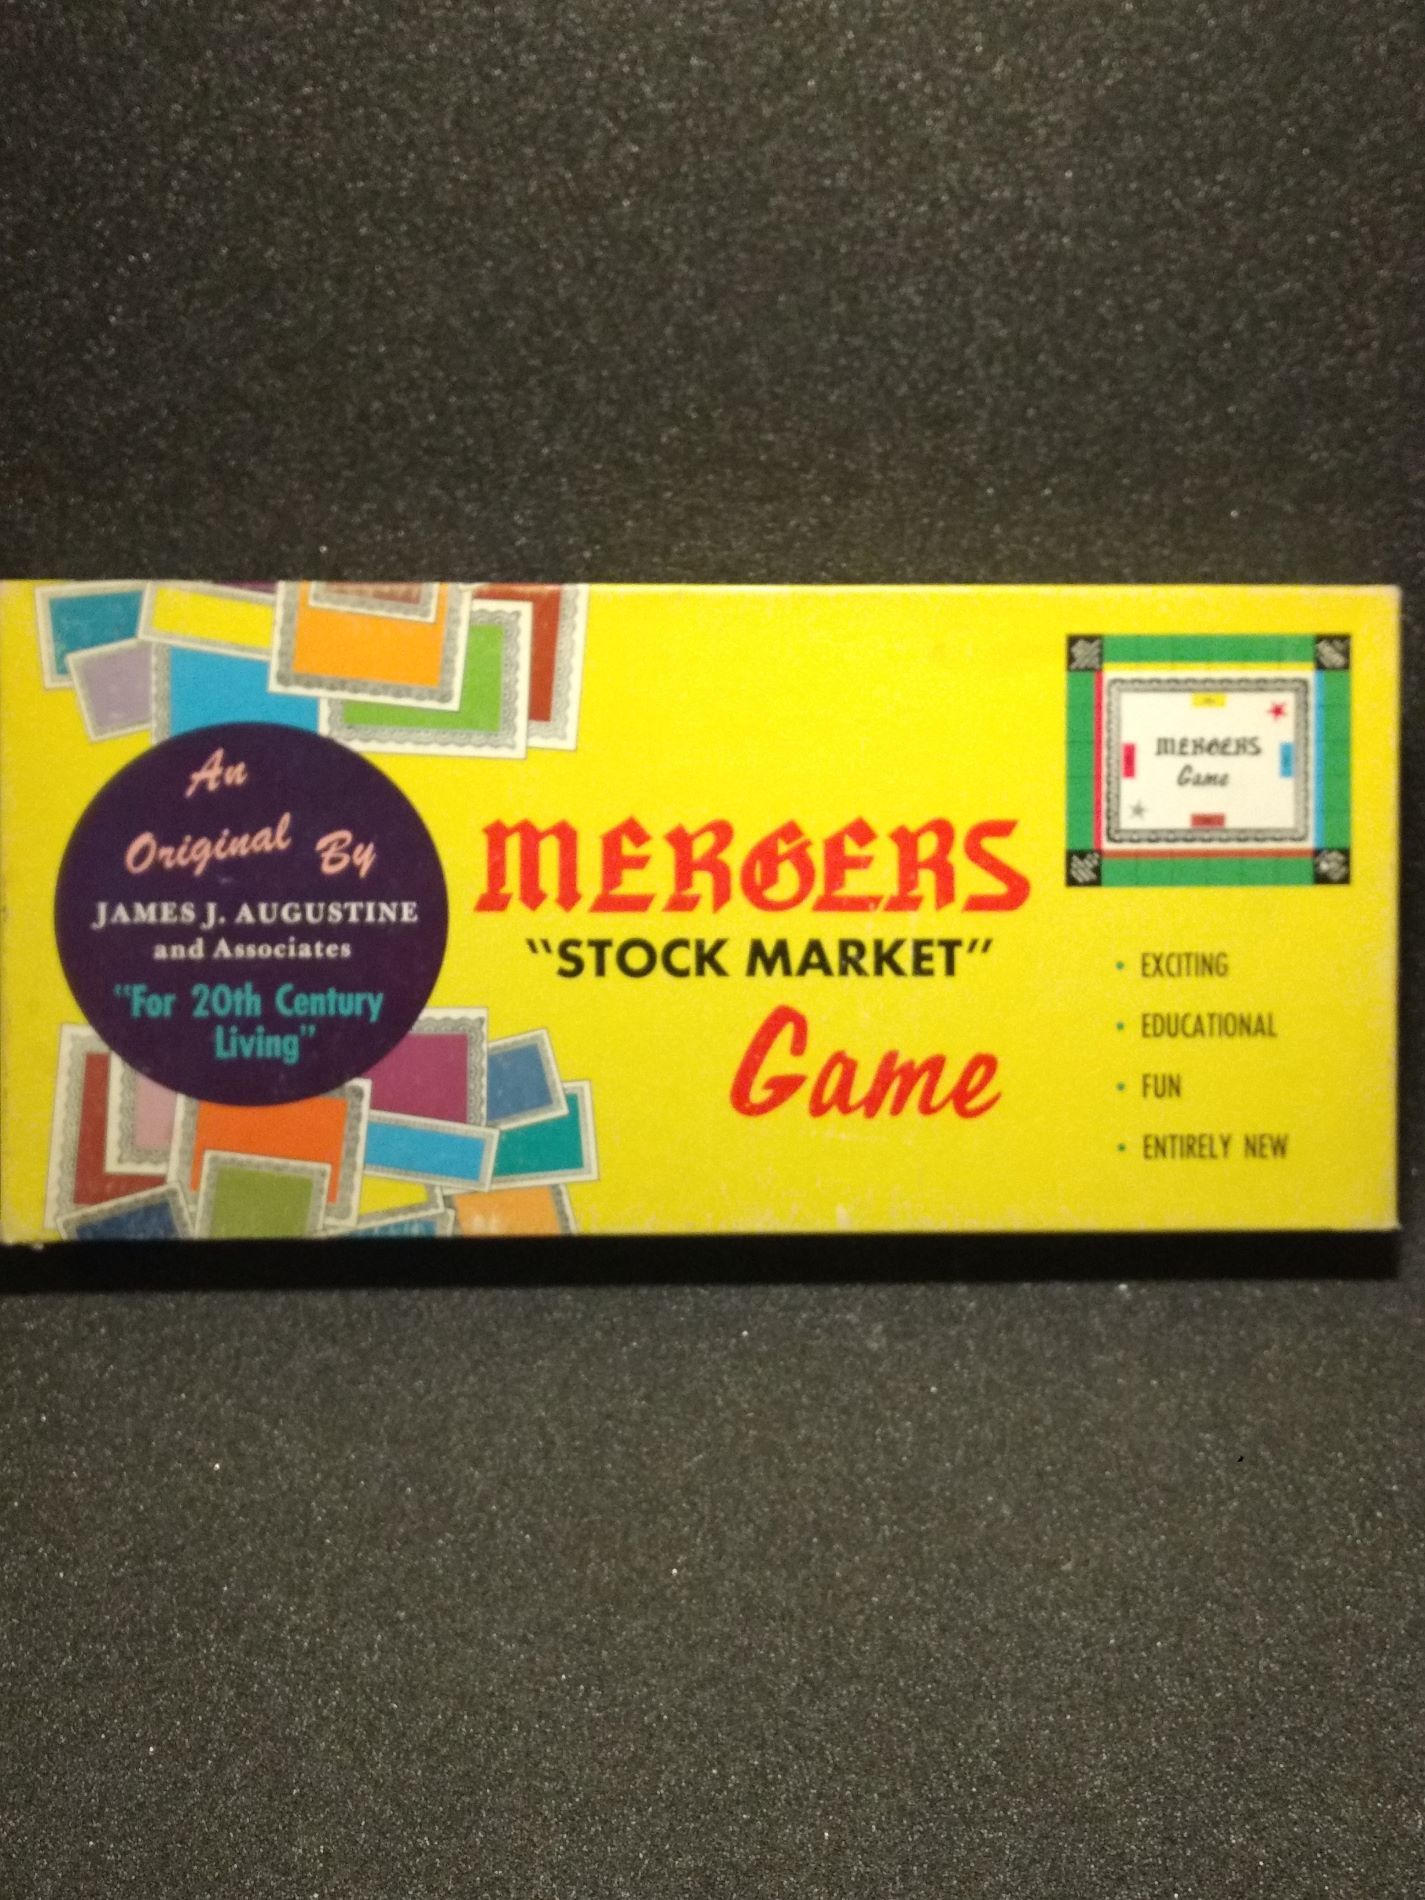 Mergers "Stock Market" Game